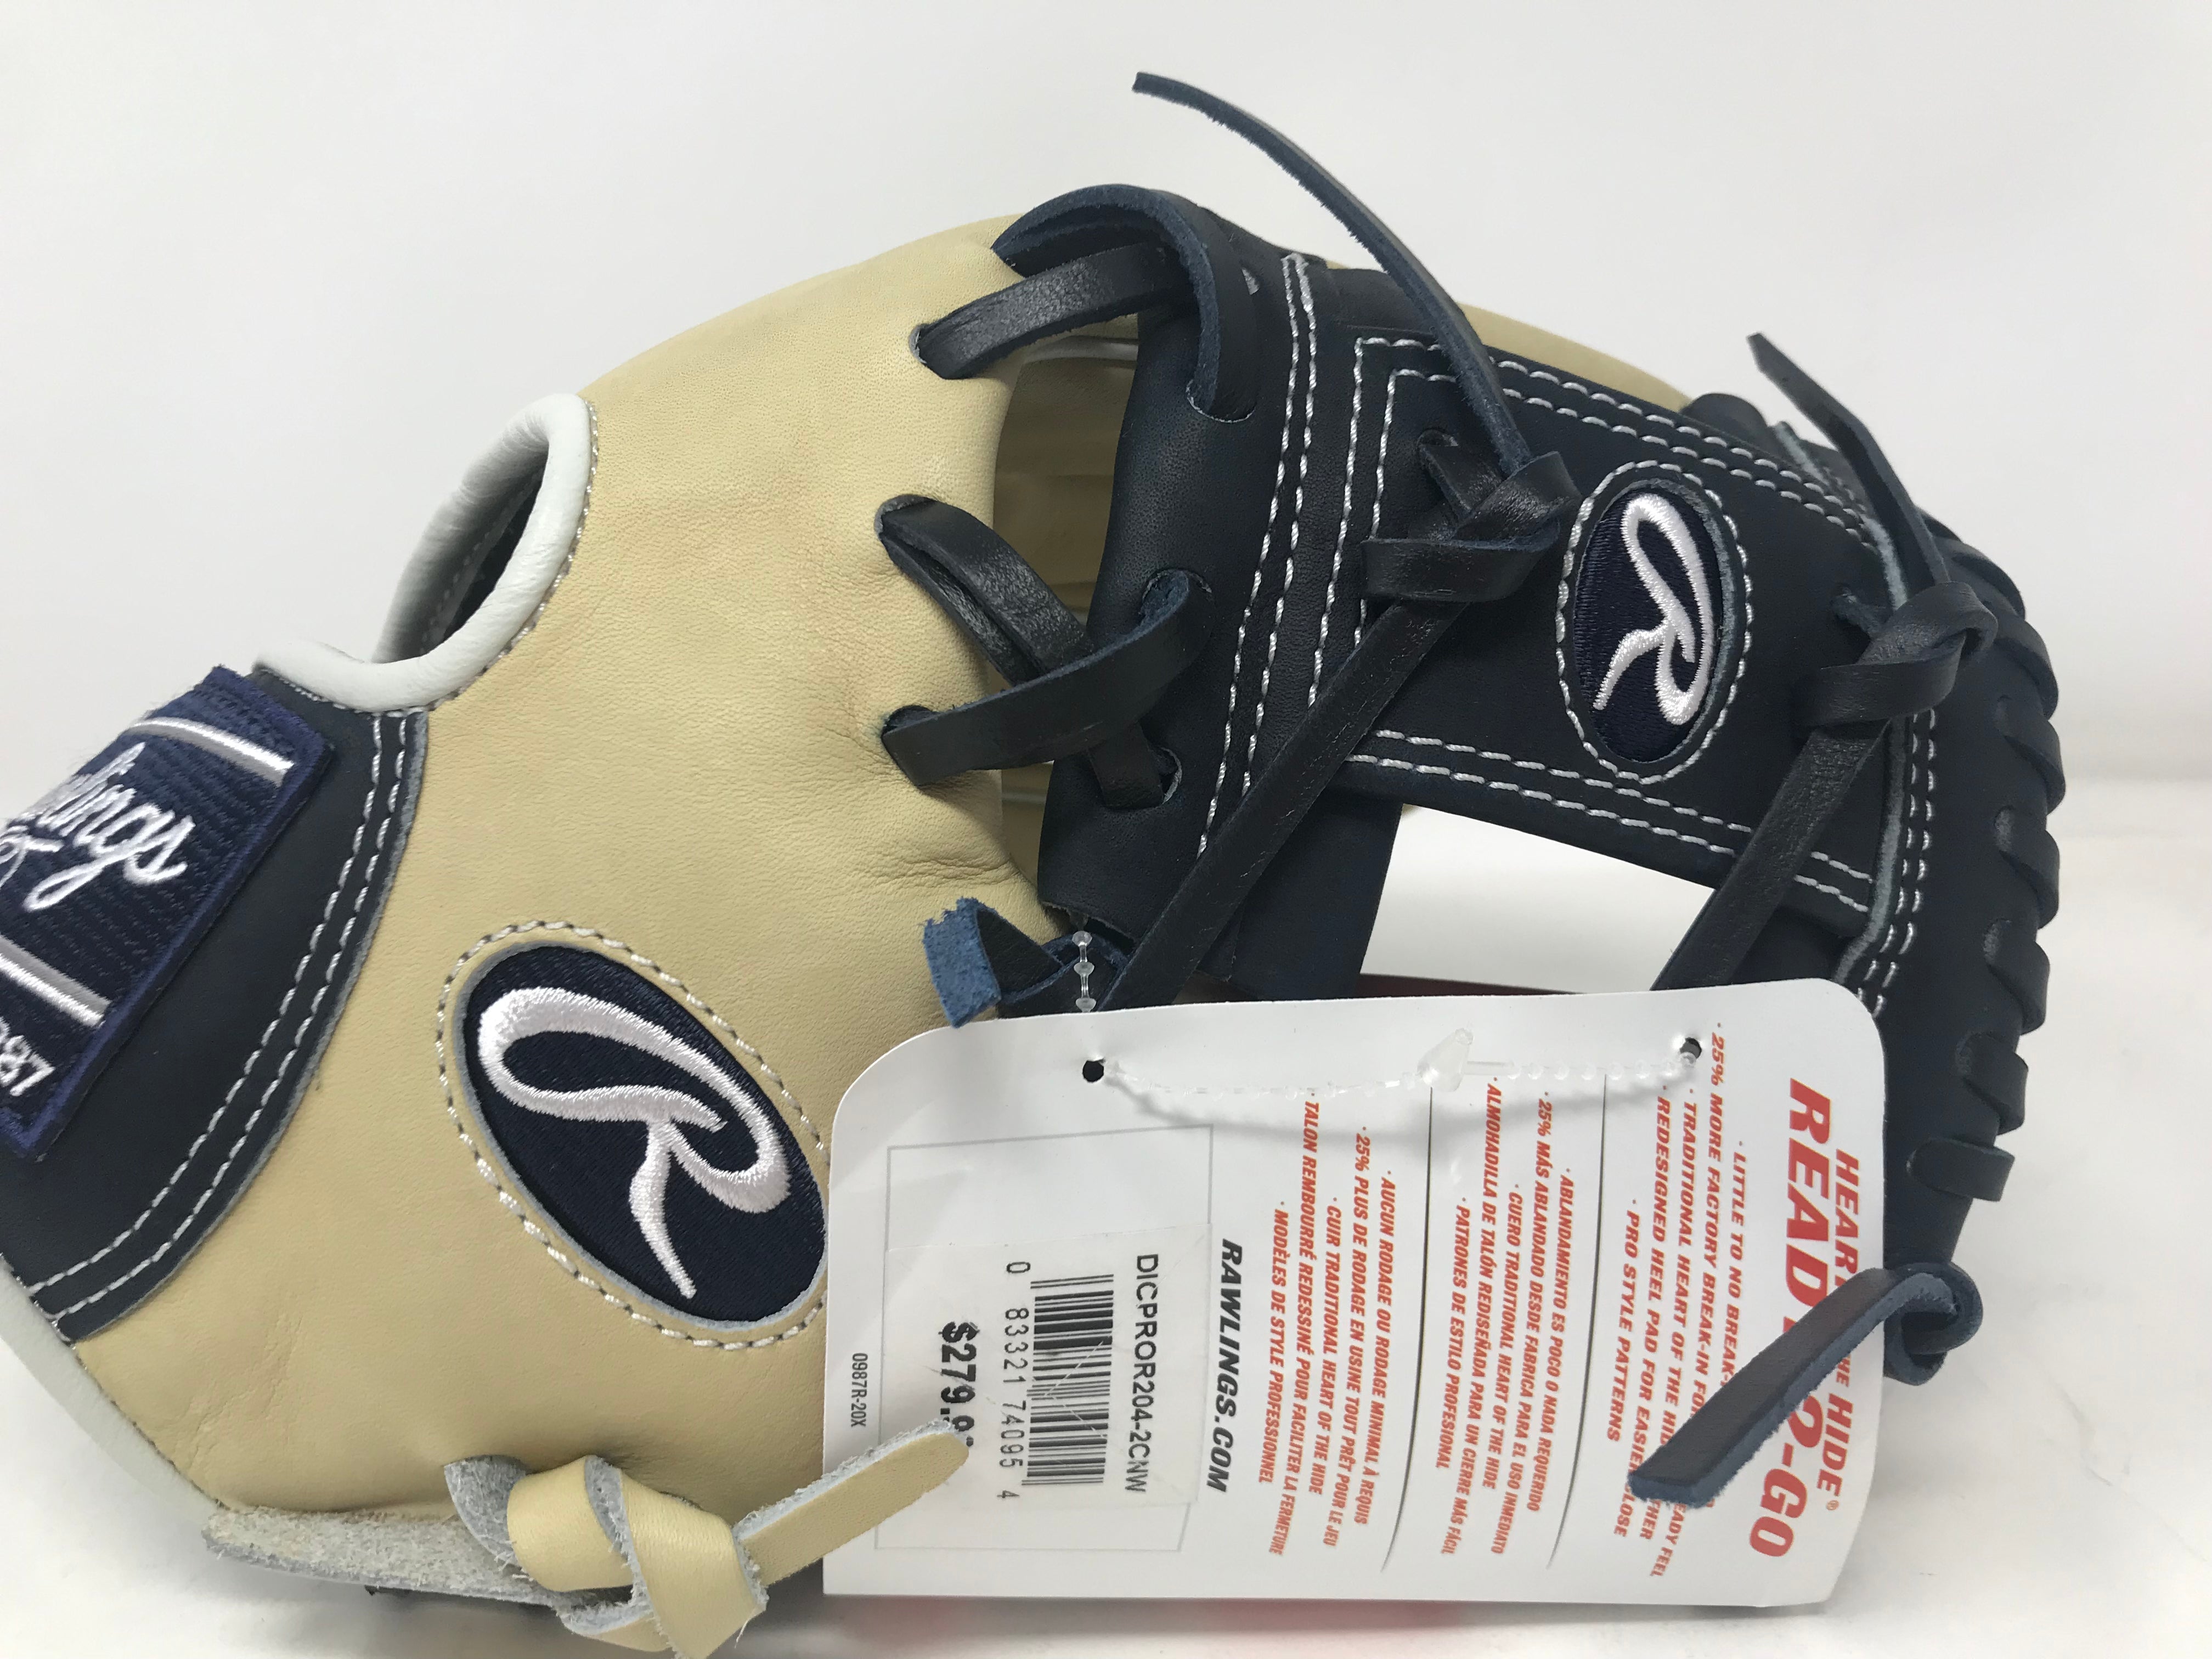 New Rawlings Heart of the Hide 2CNW Baseball Glove Series 11.5